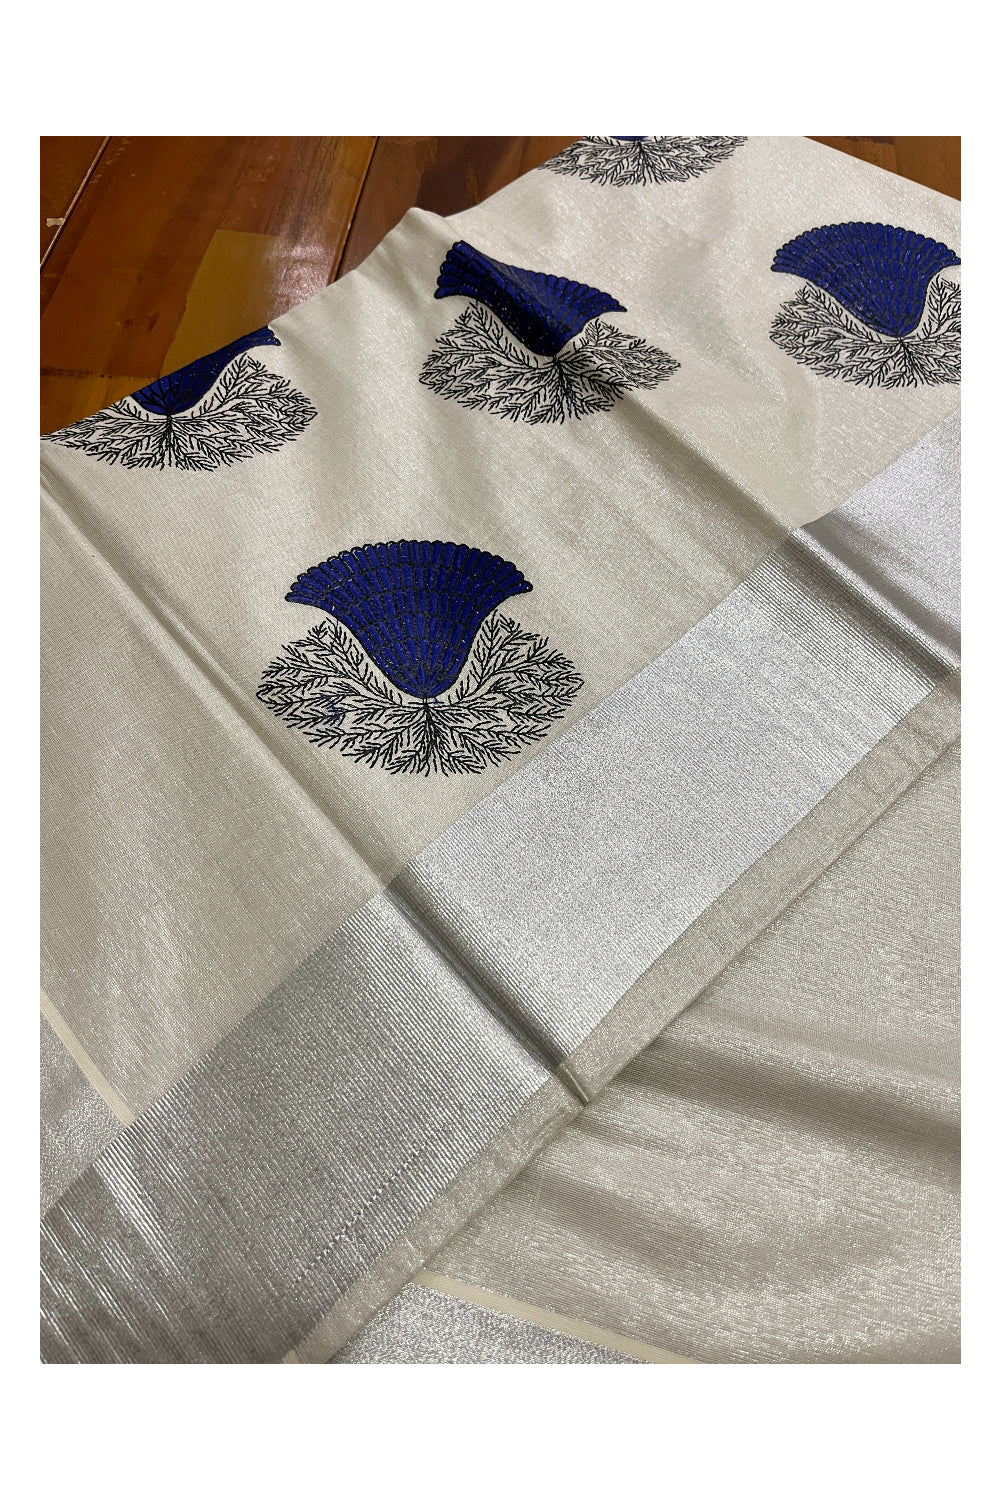 Kerala Silver Tissue Kasavu Saree with Dark Blue Floral Embroidery Design